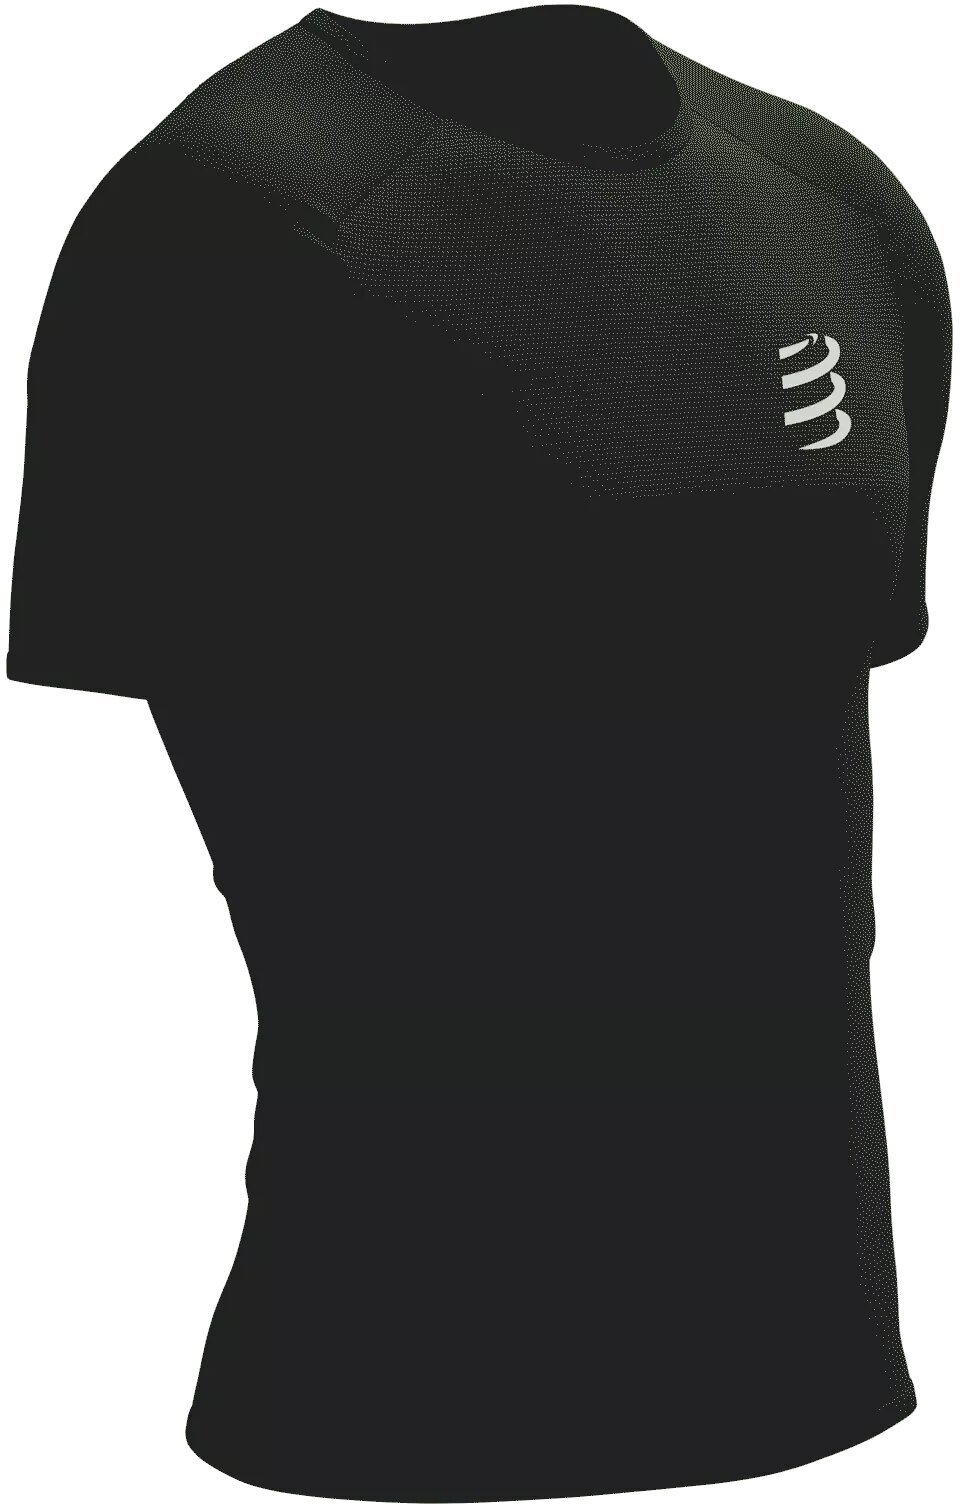 Laufshirt mit Kurzarm
 Compressport Performance SS Tshirt M Black/White M Laufshirt mit Kurzarm